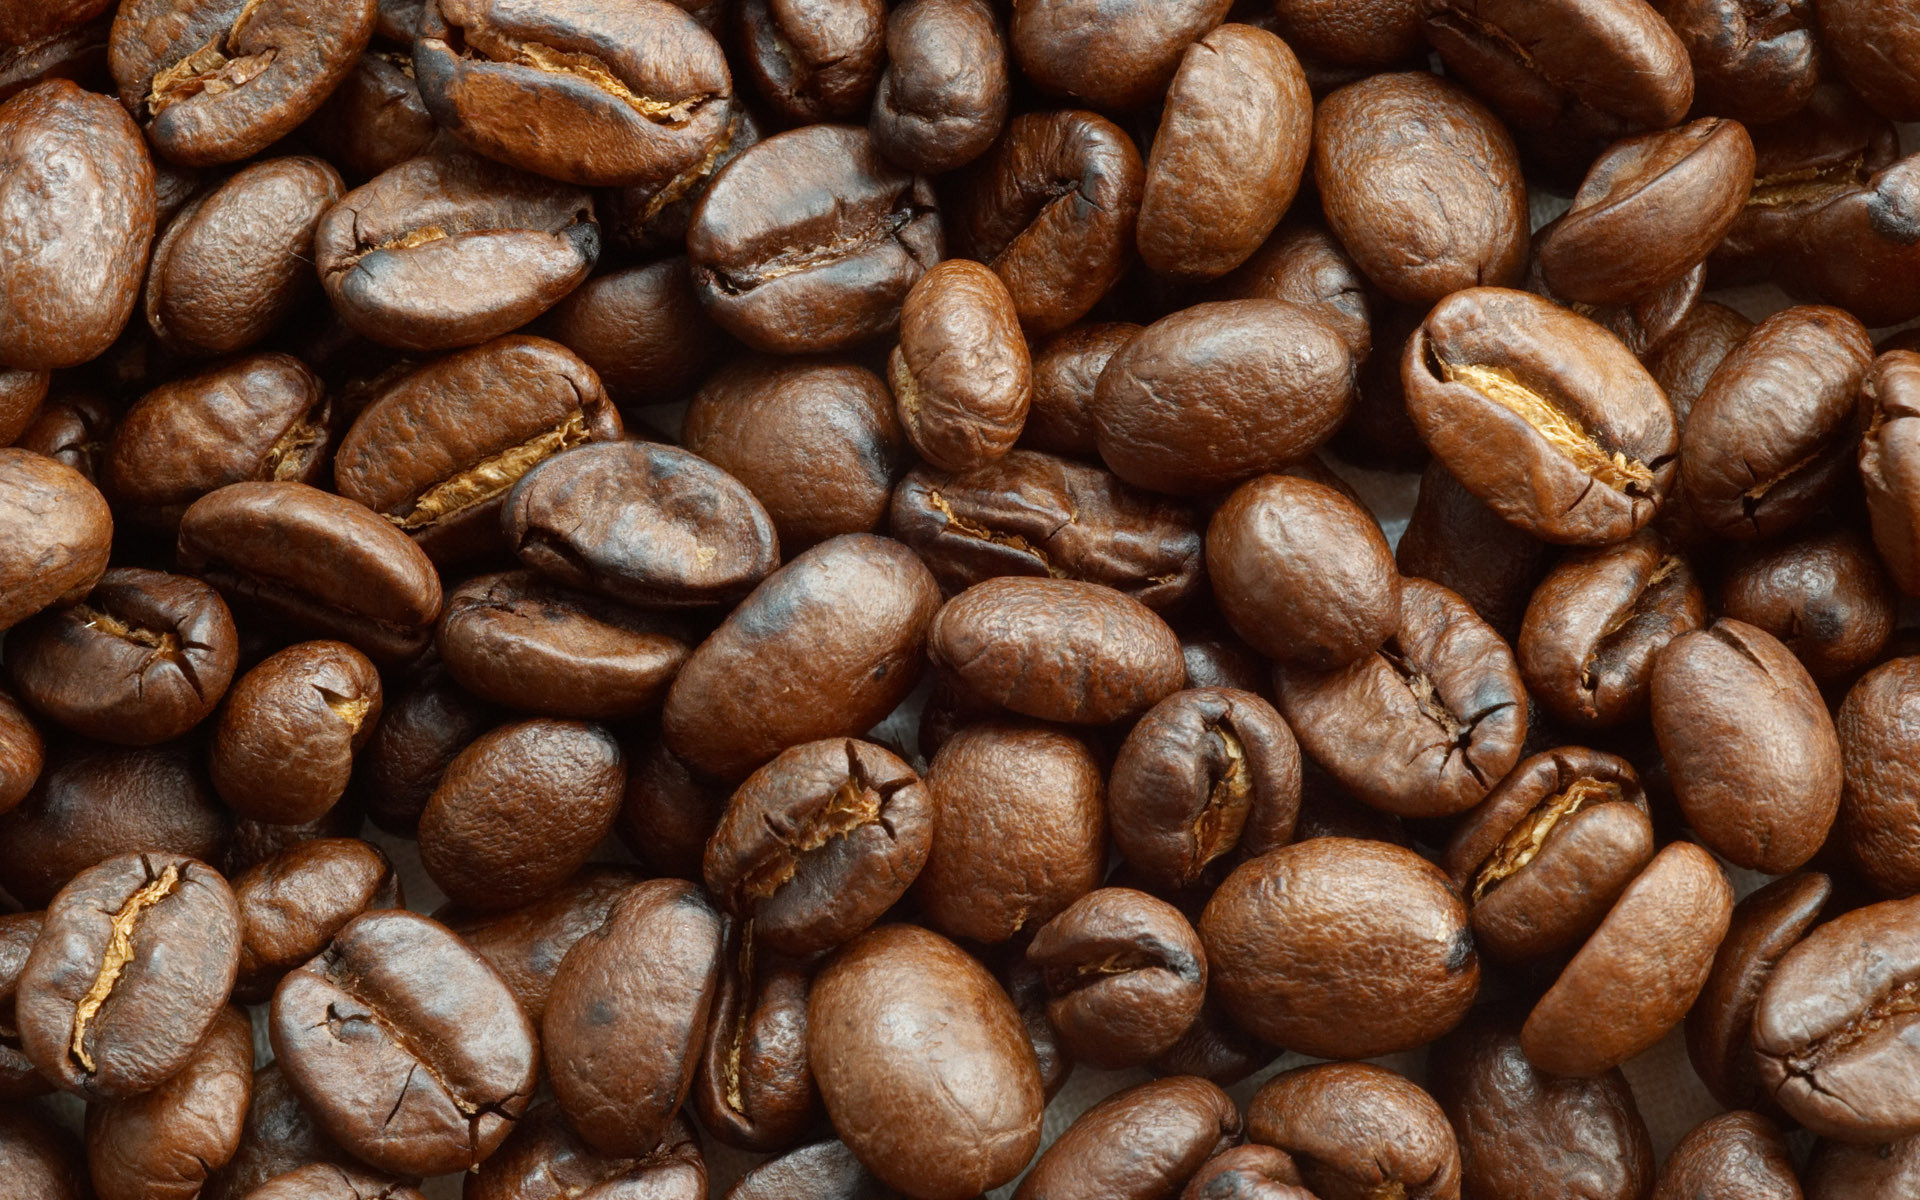  brown roasted coffee beans macro closeup